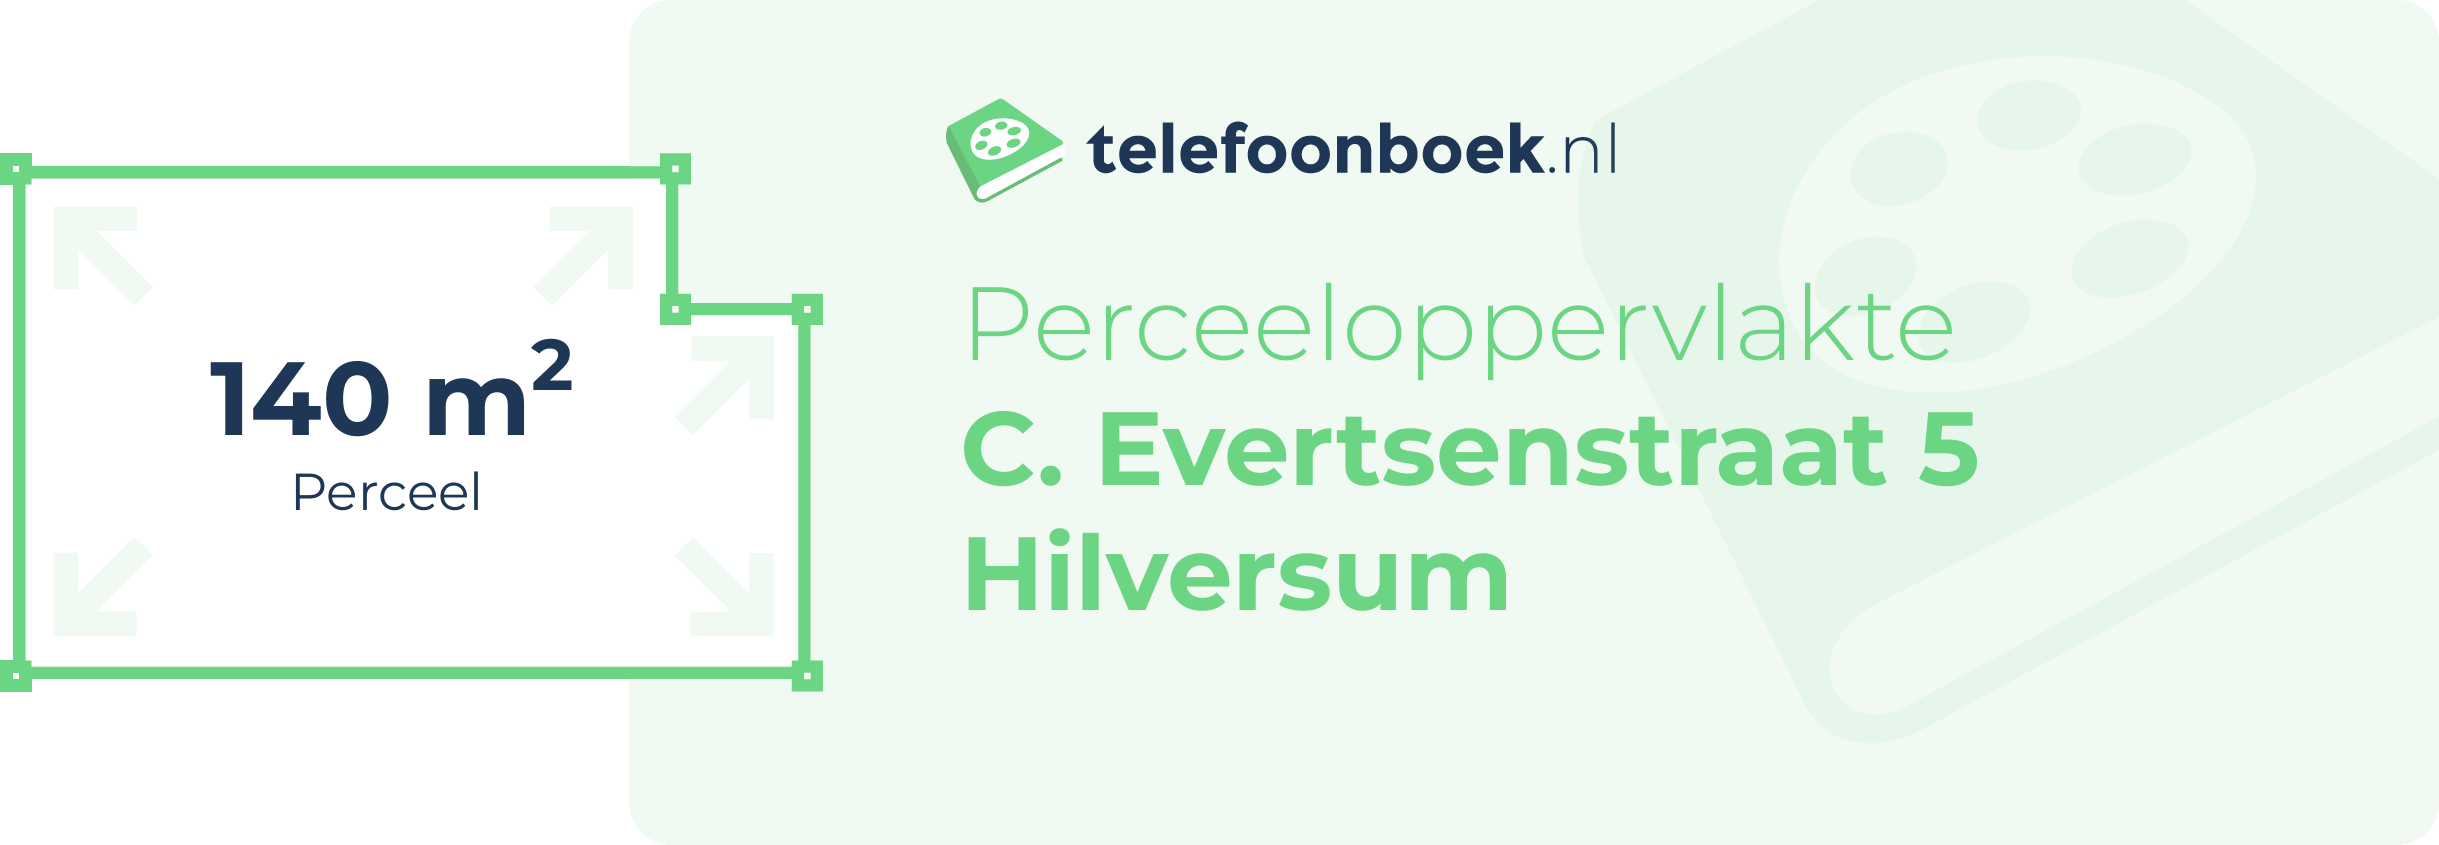 Perceeloppervlakte C. Evertsenstraat 5 Hilversum